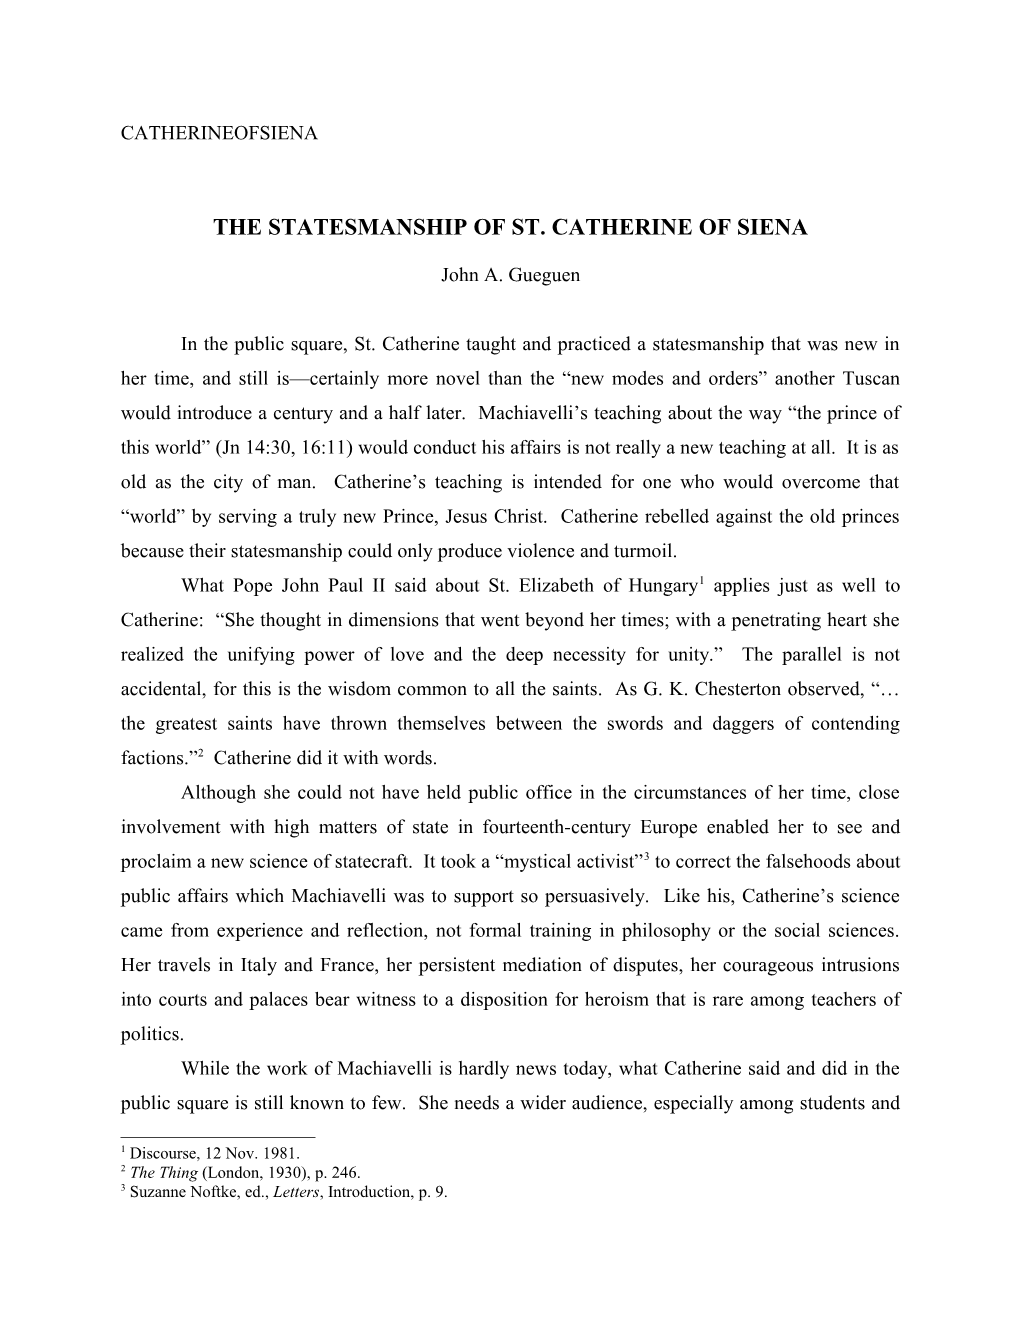 The Statesmanship of St. Catherine of Siena